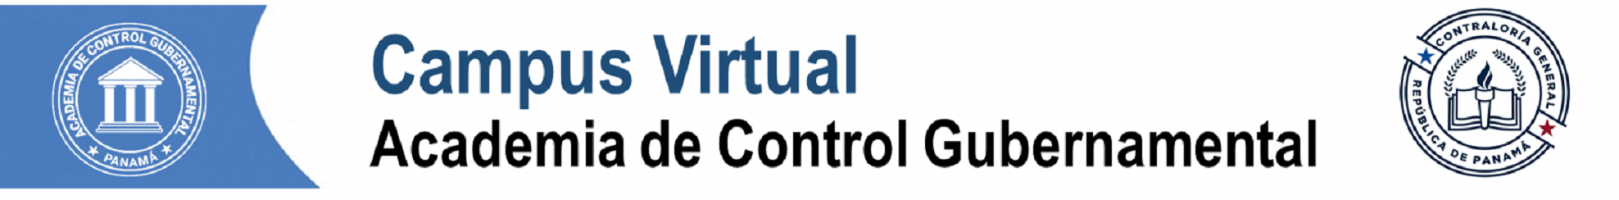 Campus Virtual - Academia de Control Gubernamental